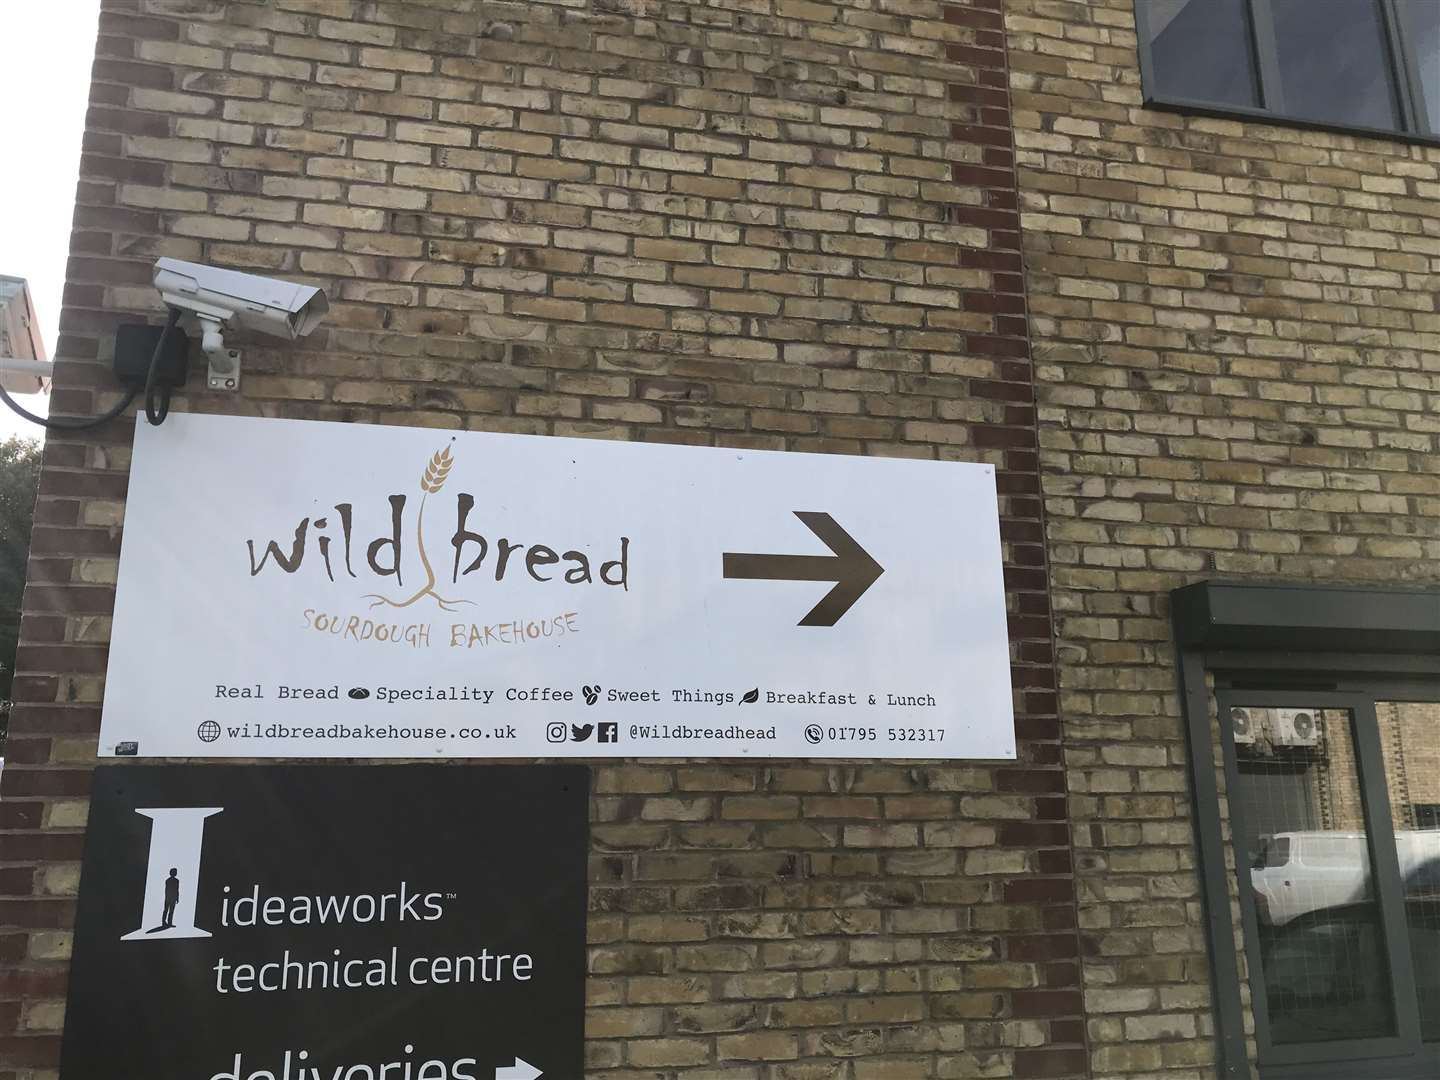 Wild Bread Bakehouse shut its doors for good on October 8